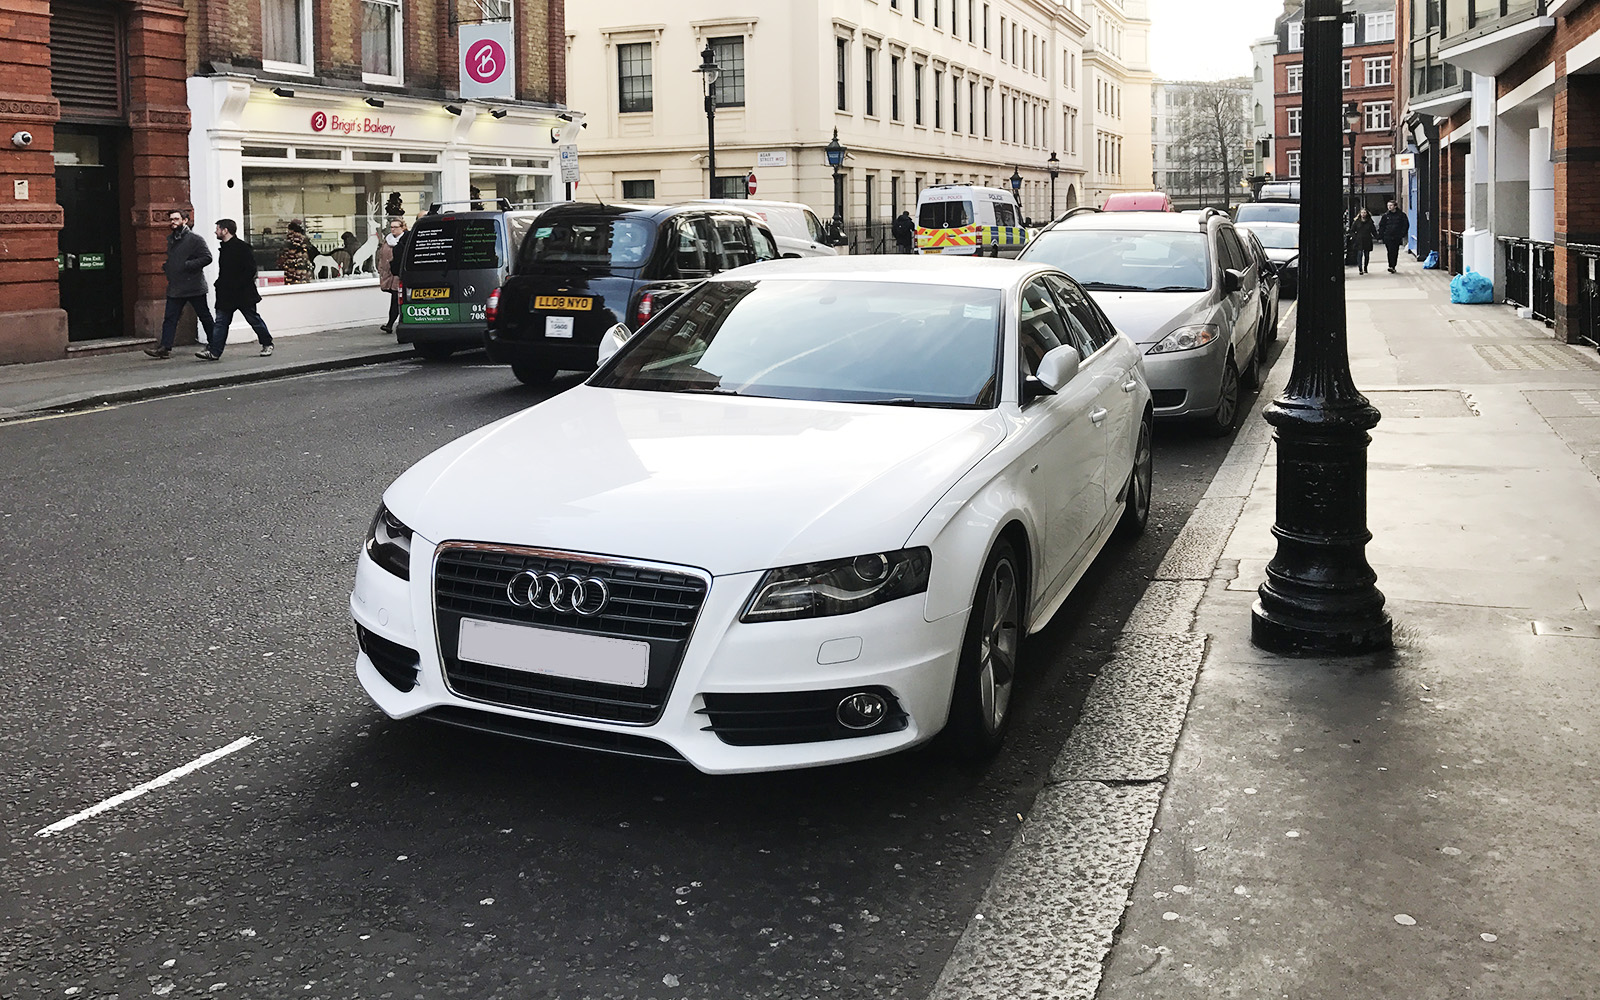 Car Audi 6 January 2017 Covent Garden